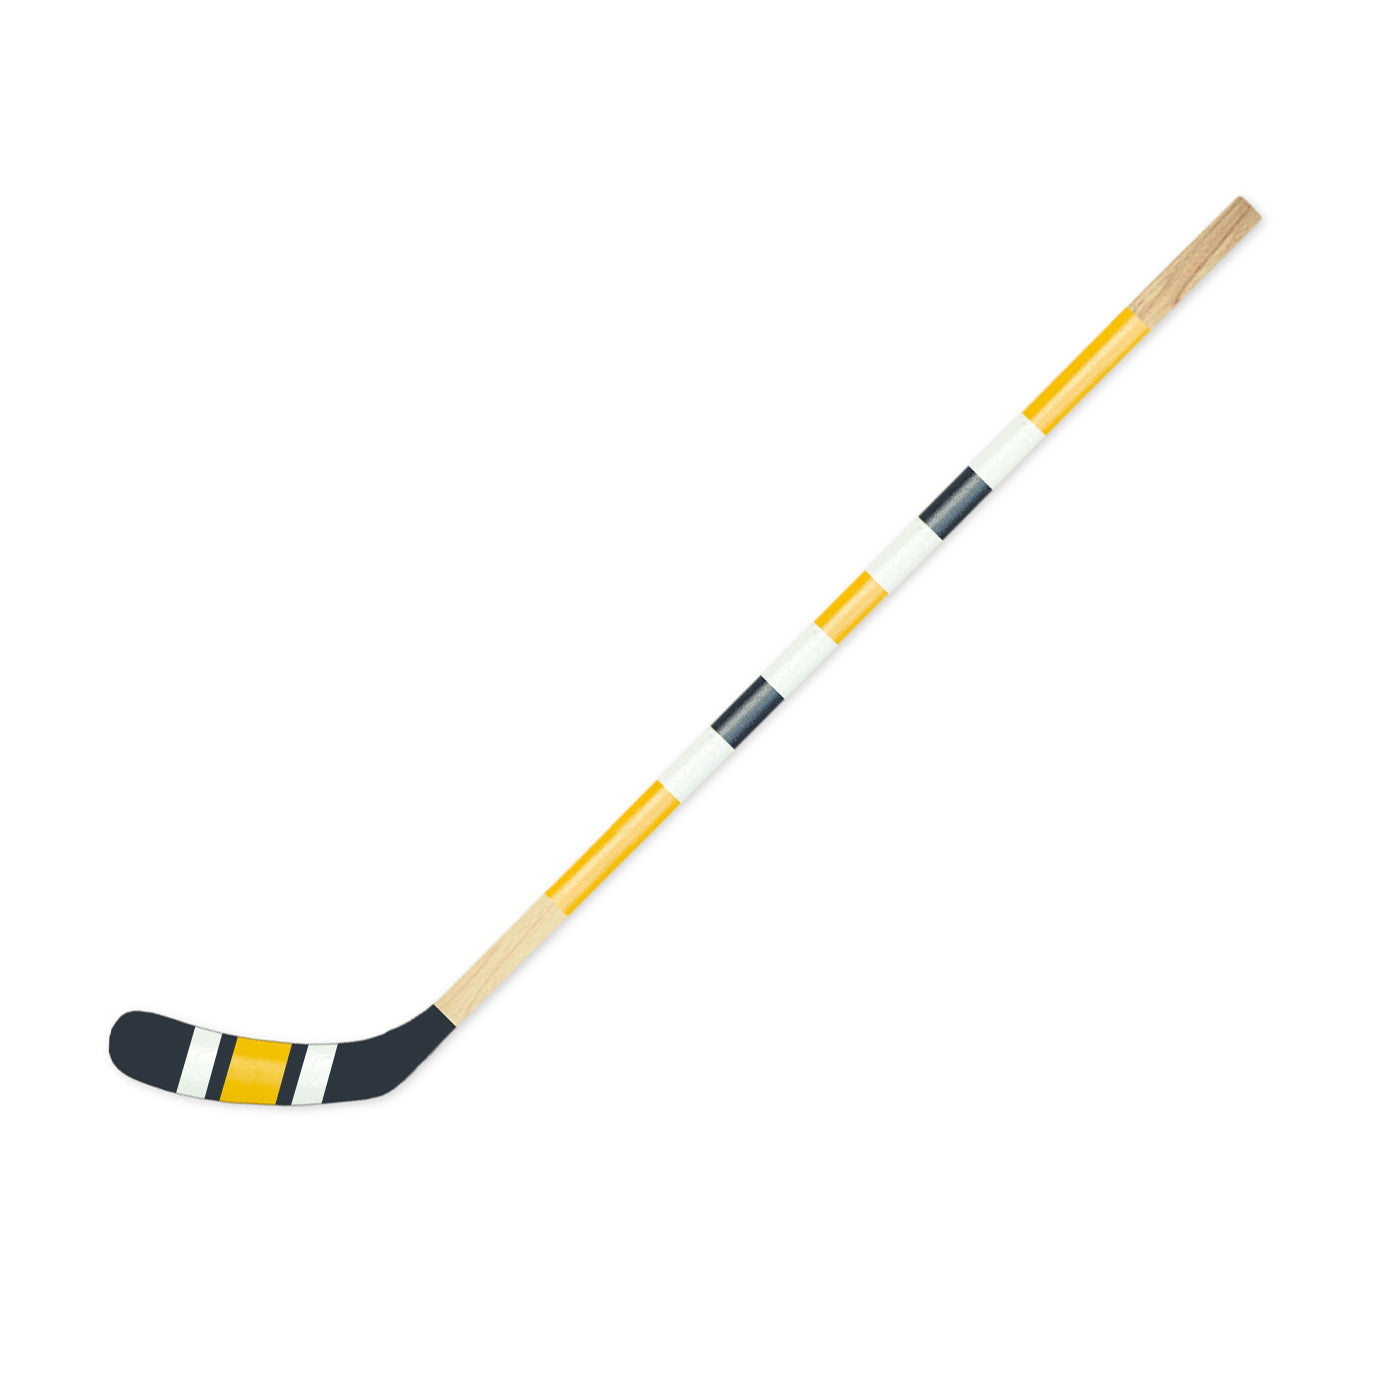 No. 1 Mitchell Hockey Stick